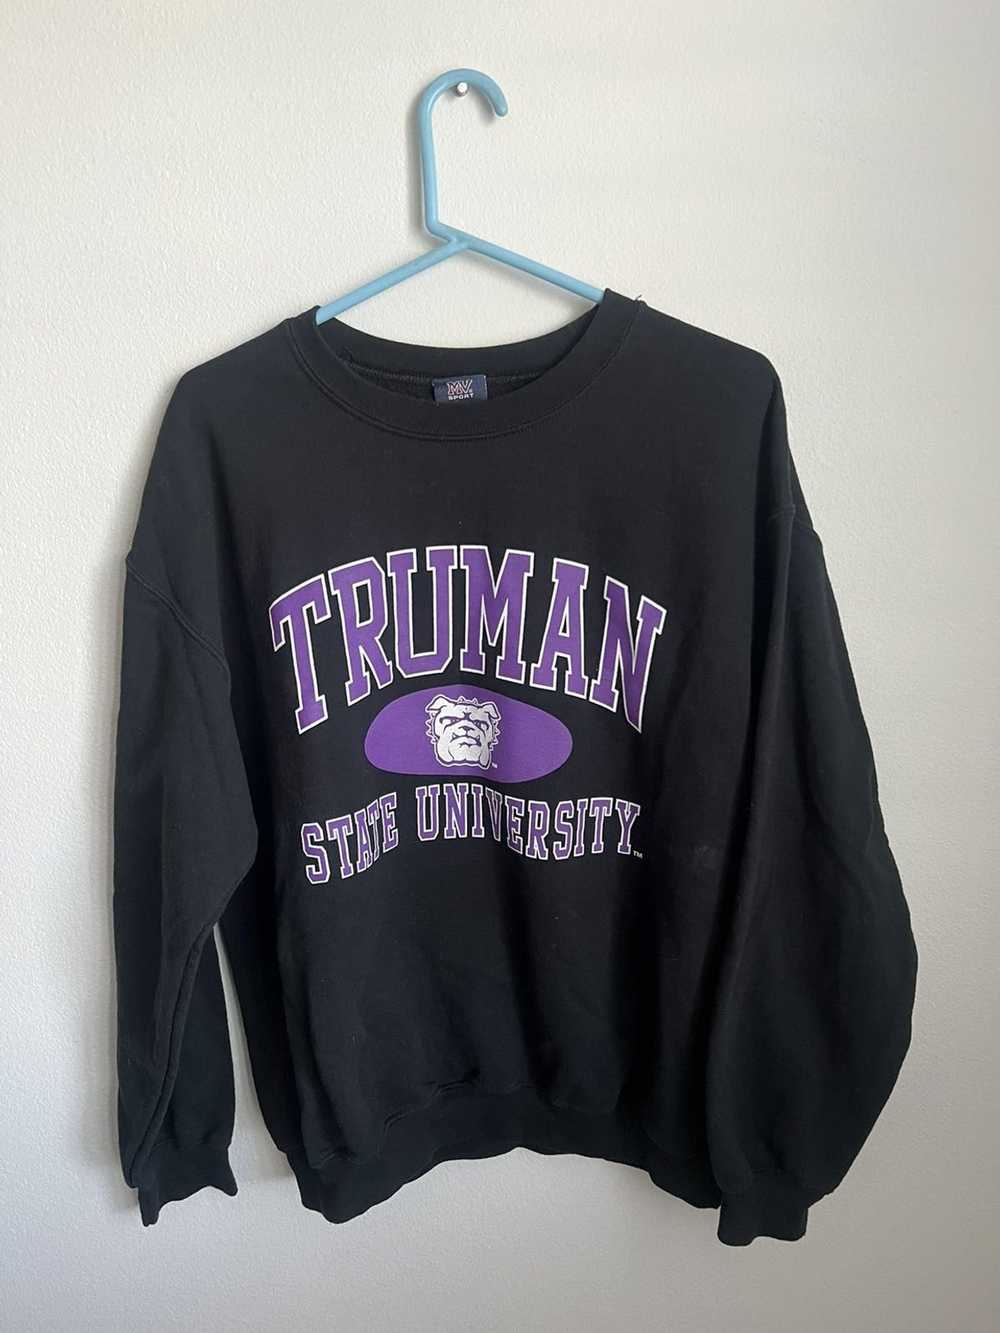 Other Vintage Truman State University sweatshirt - image 1